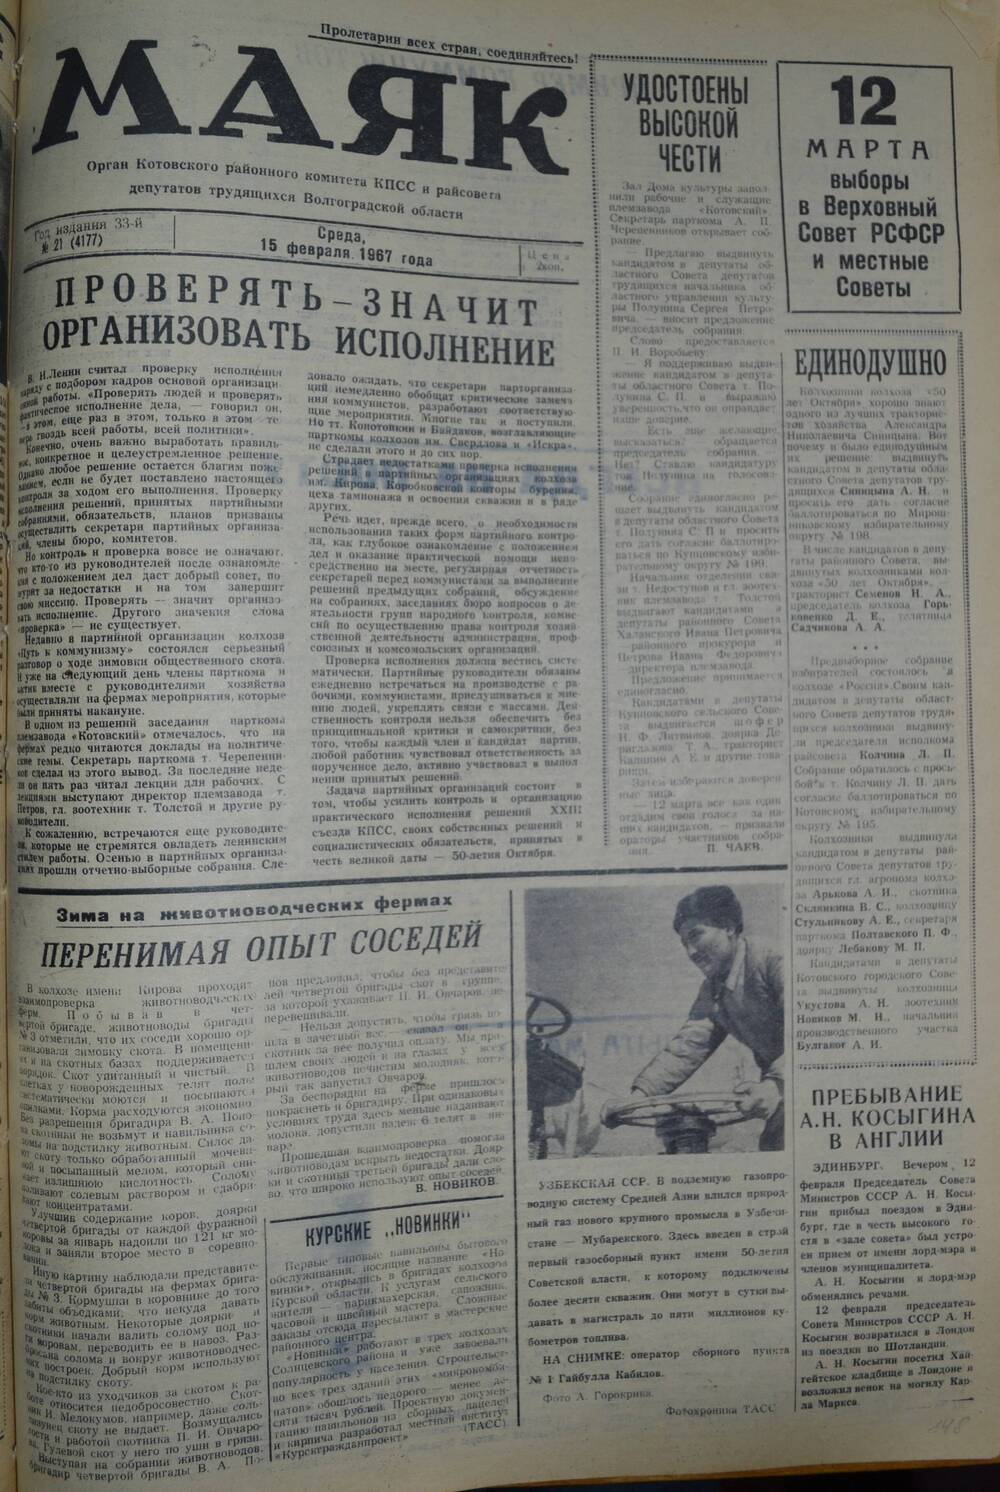 Газета Маяк № 21 (4177). Среда, 15 февраля 1967 года.